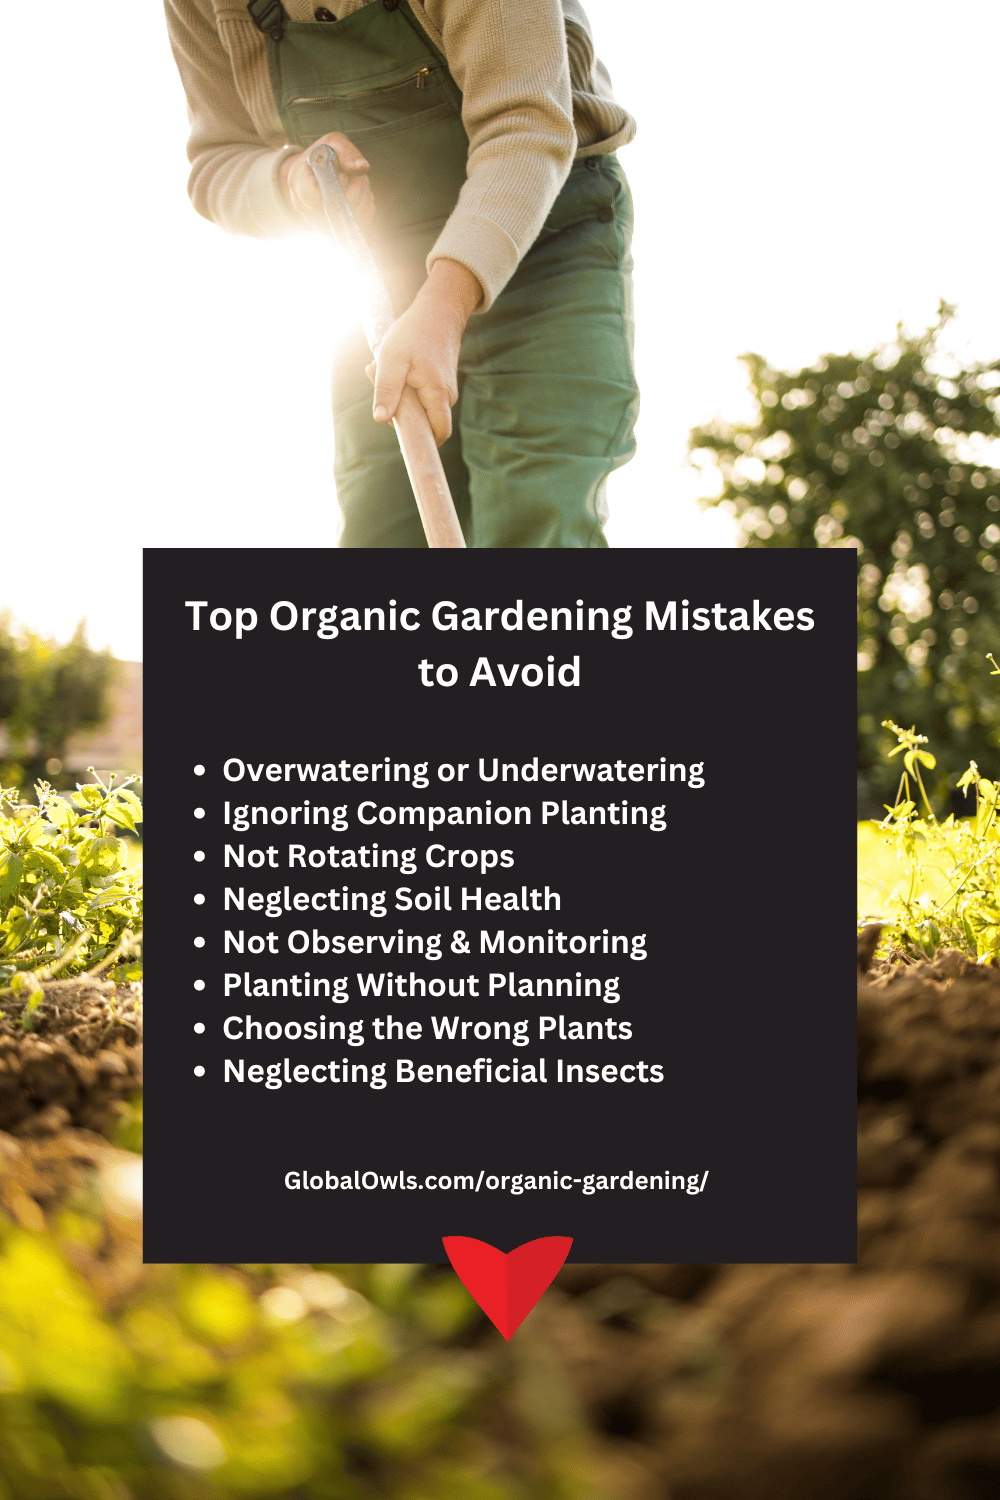 Top Organic Gardening Mistakes to Avoid